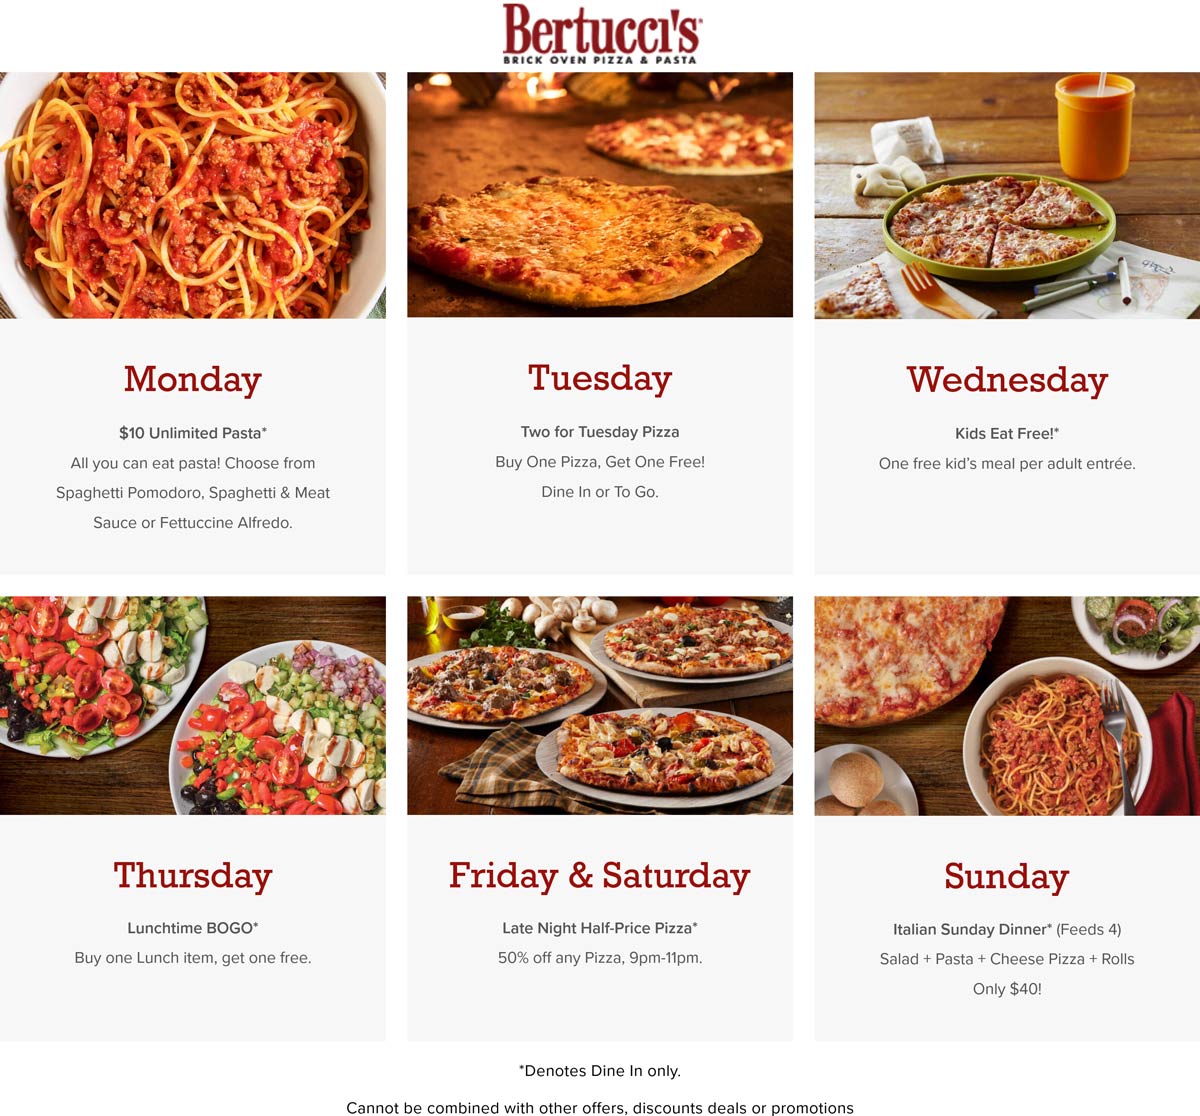 Bertuccis restaurants Coupon  Second pizza free Tuesdays & more at Bertuccis restaurants #bertuccis 